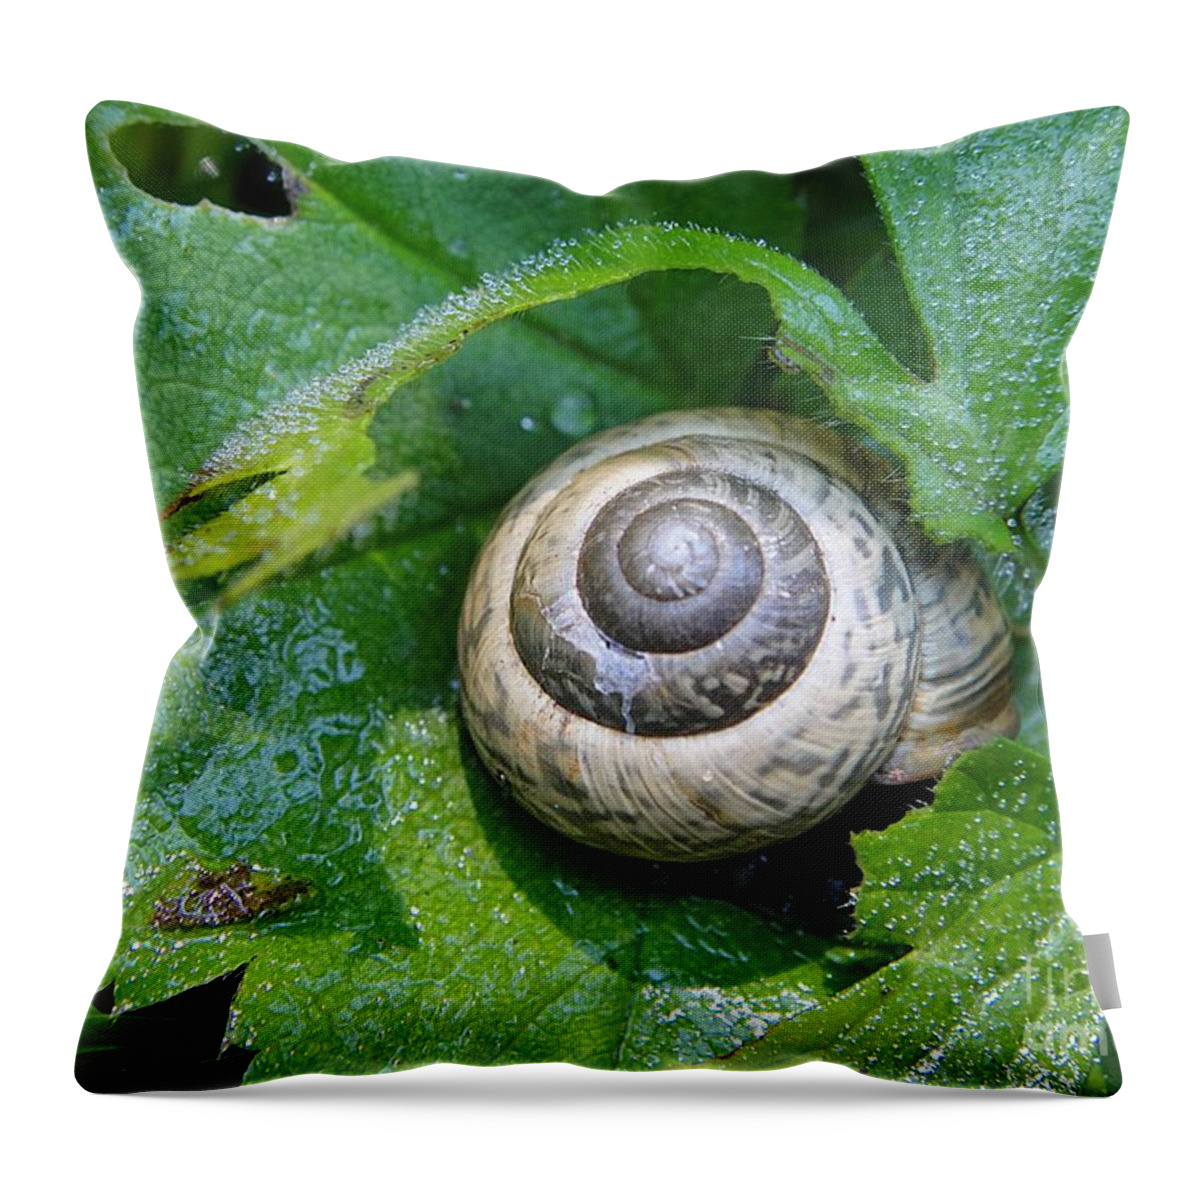 Snail Throw Pillow featuring the photograph Beautiful snail by Karin Ravasio